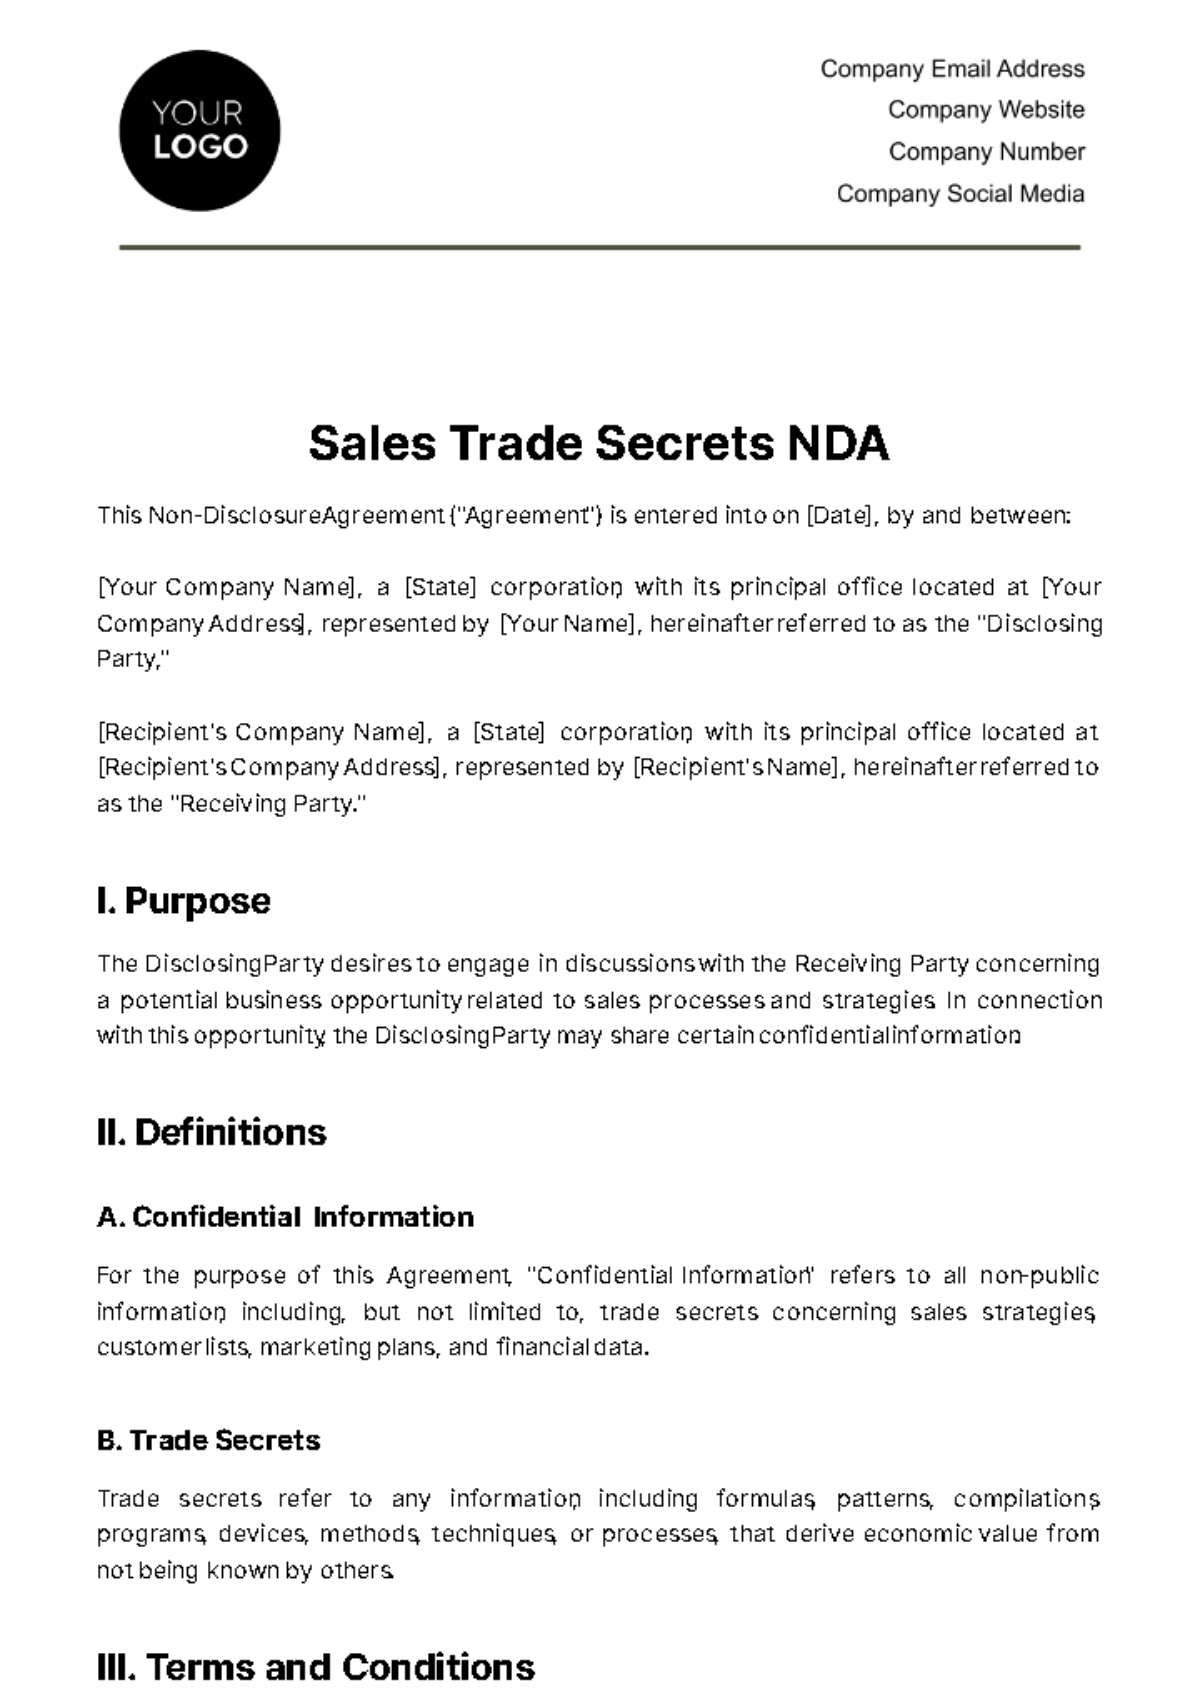 Sales Trade Secrets NDA Template